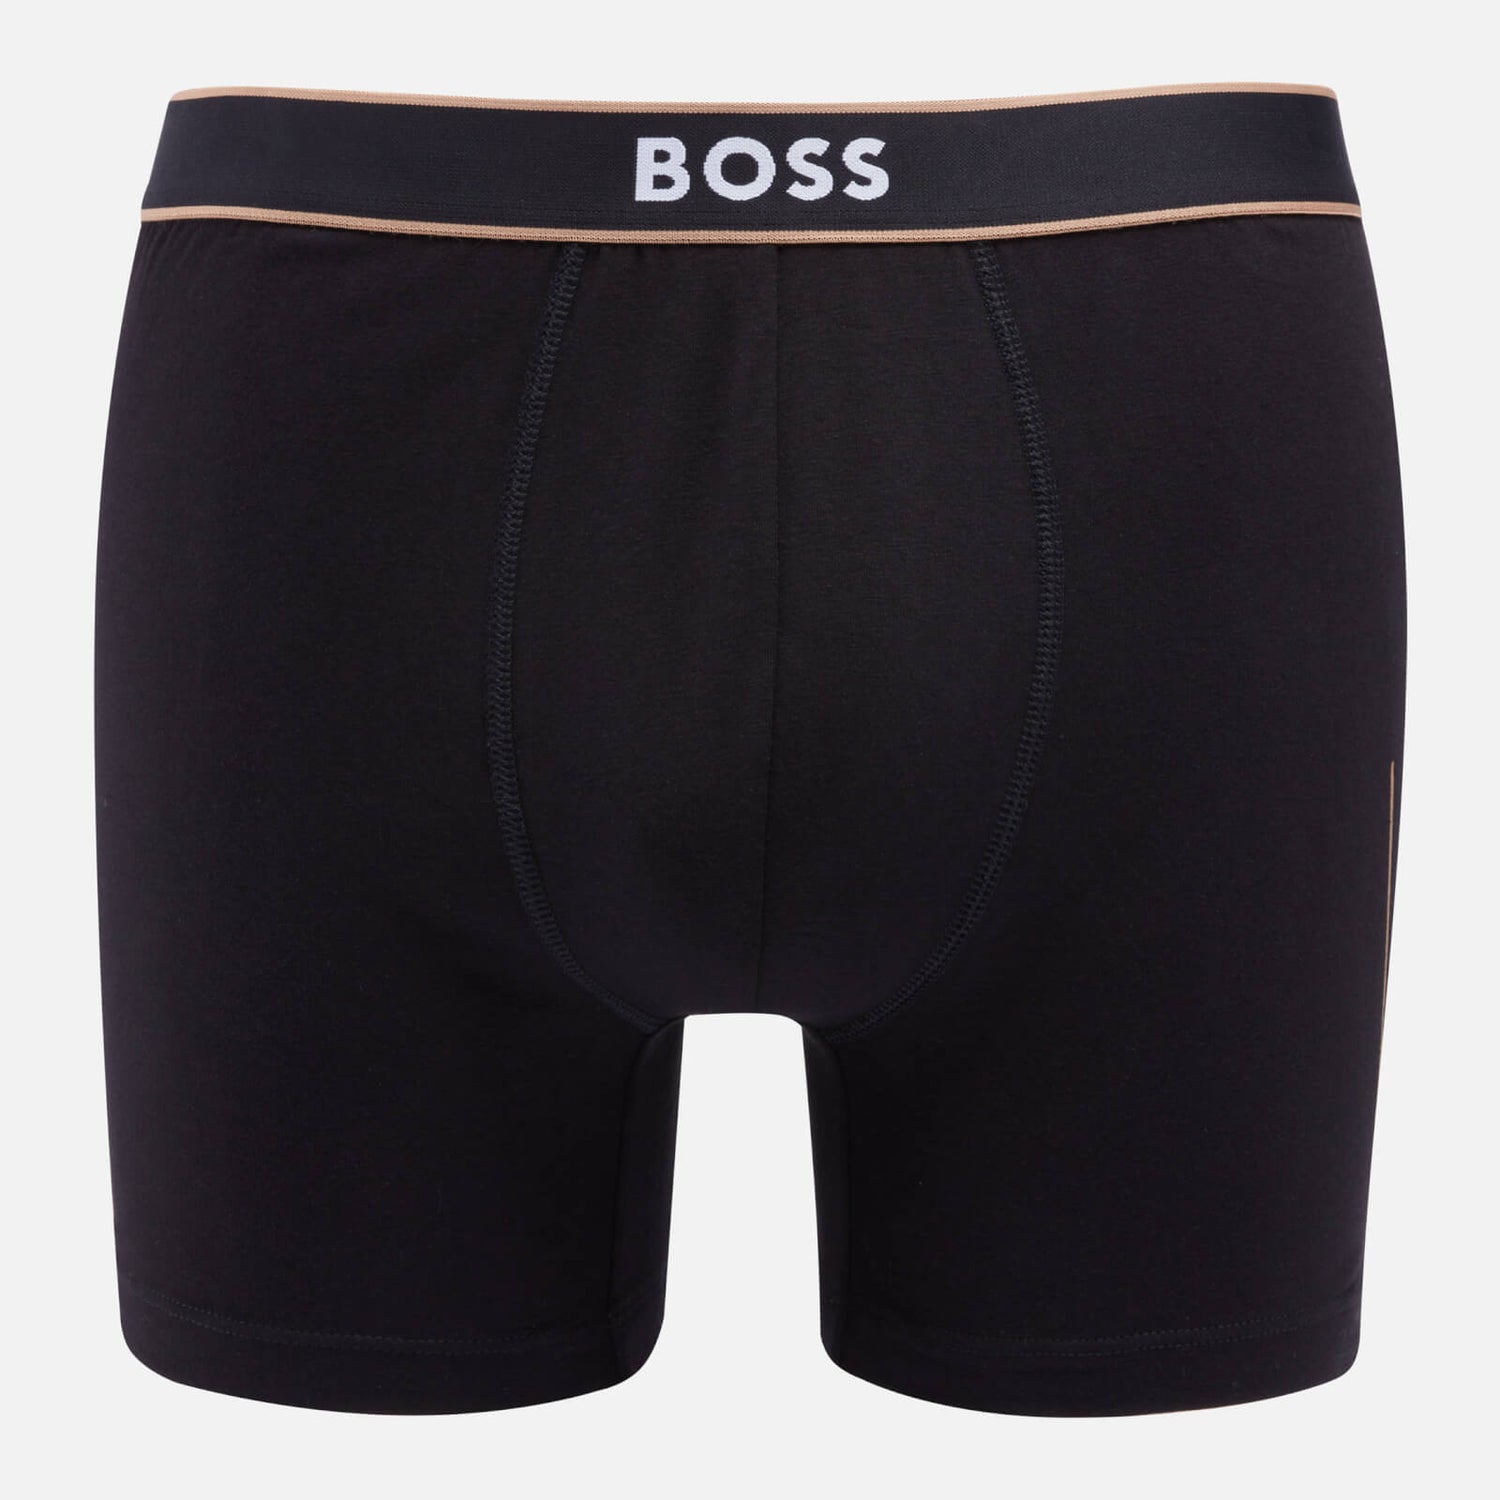 BOSS Bodywear Stretch-Cotton Boxer Briefs - S